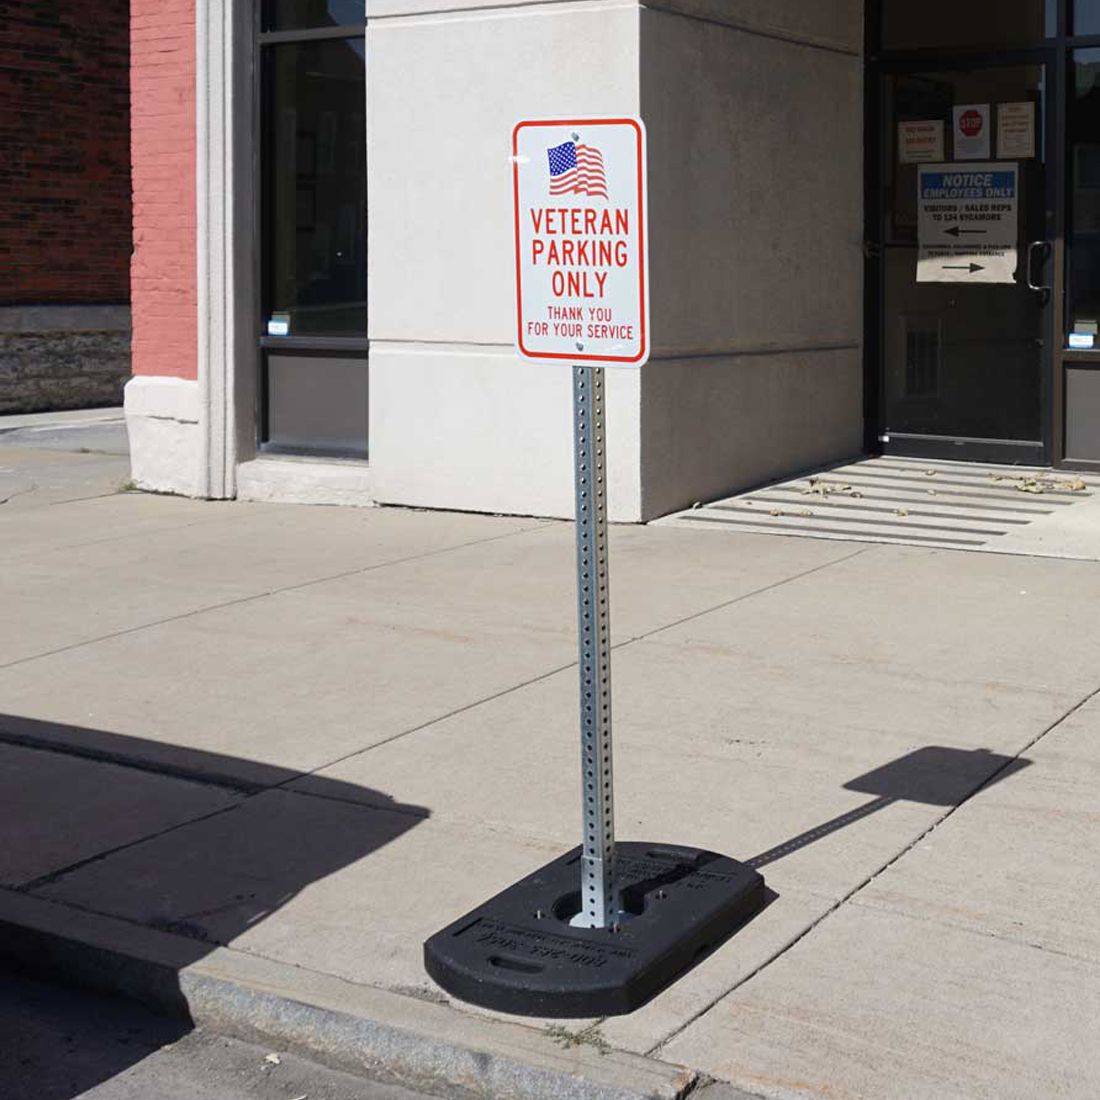 Parking Lot Sign Kit - Stop Sign & Sign Post